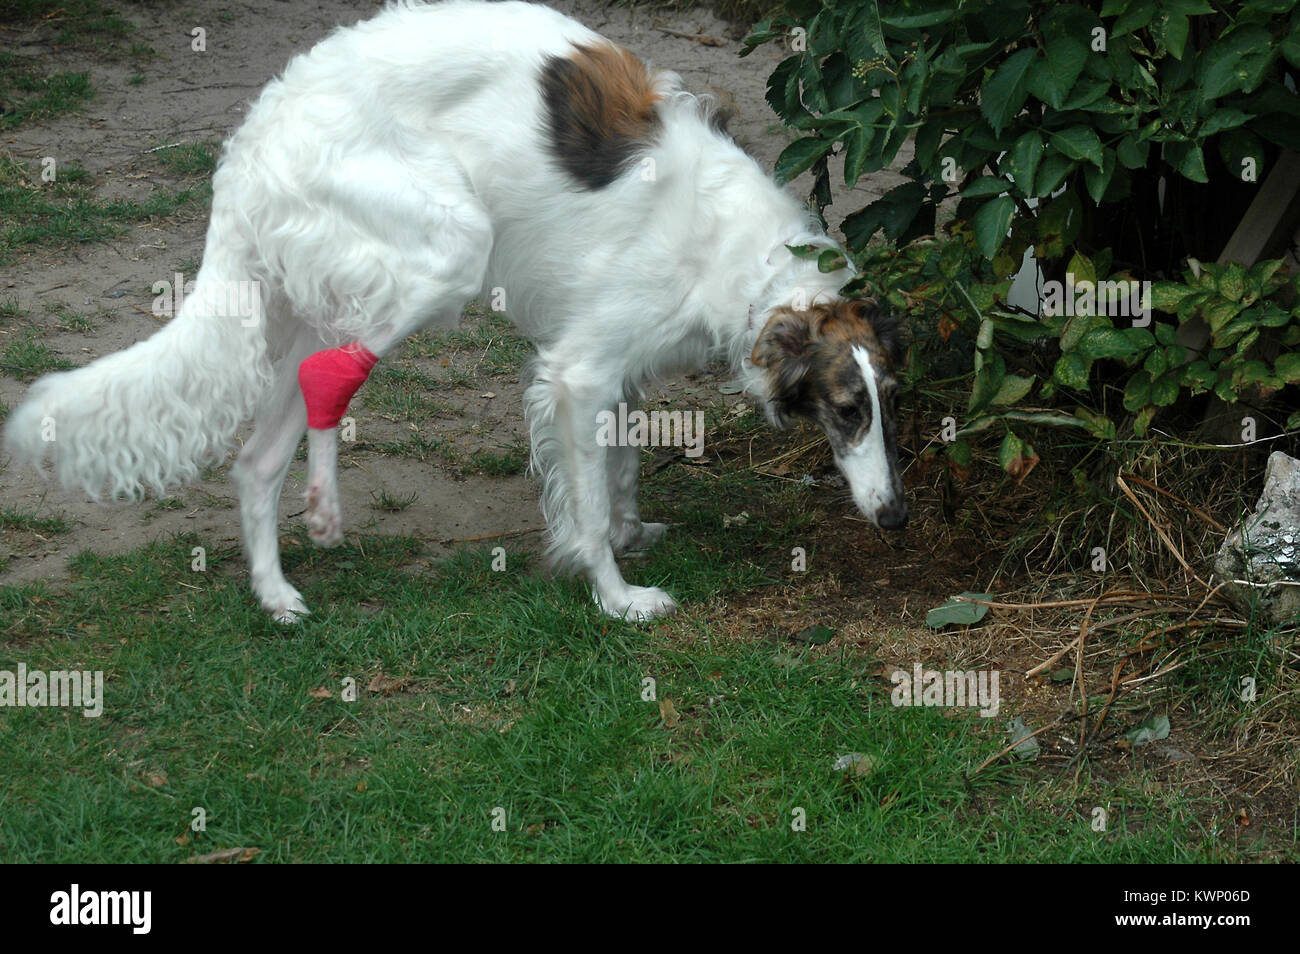 Borzoi do with pink bandage on the hind leg. Stock Photo